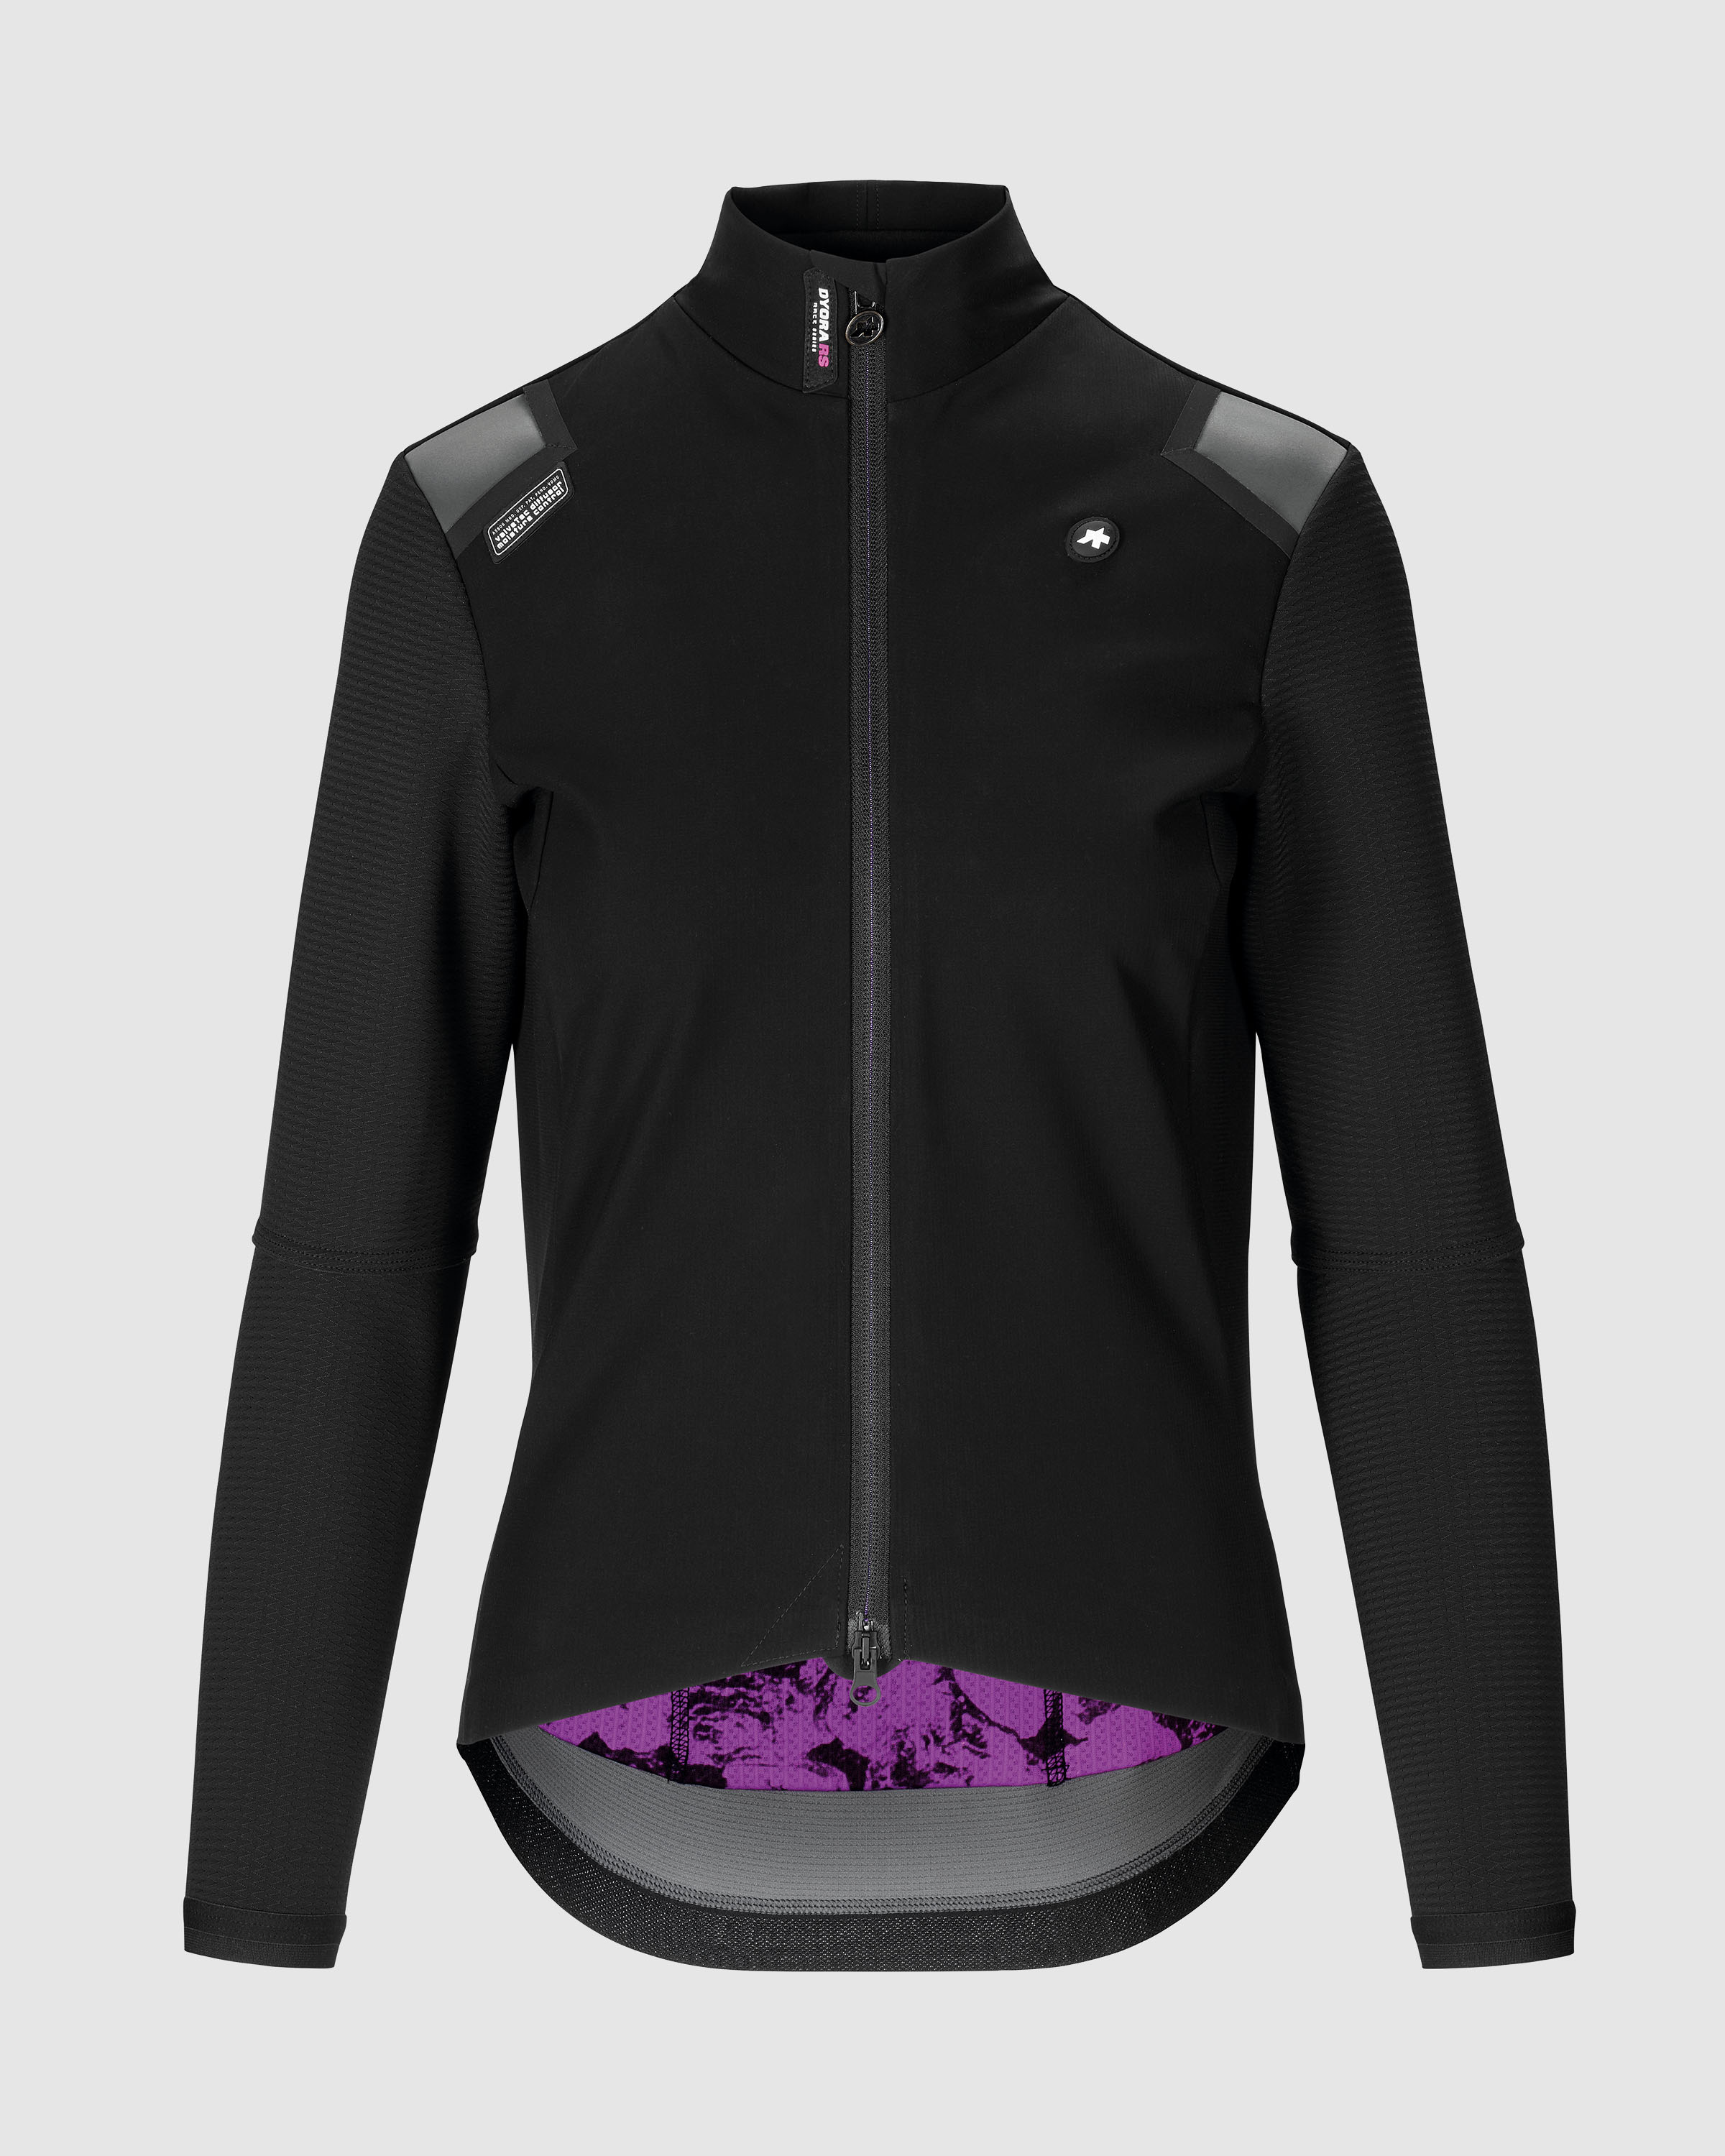 DYORA RS Winter Jacket, blackSeries » ASSOS Of Switzerland